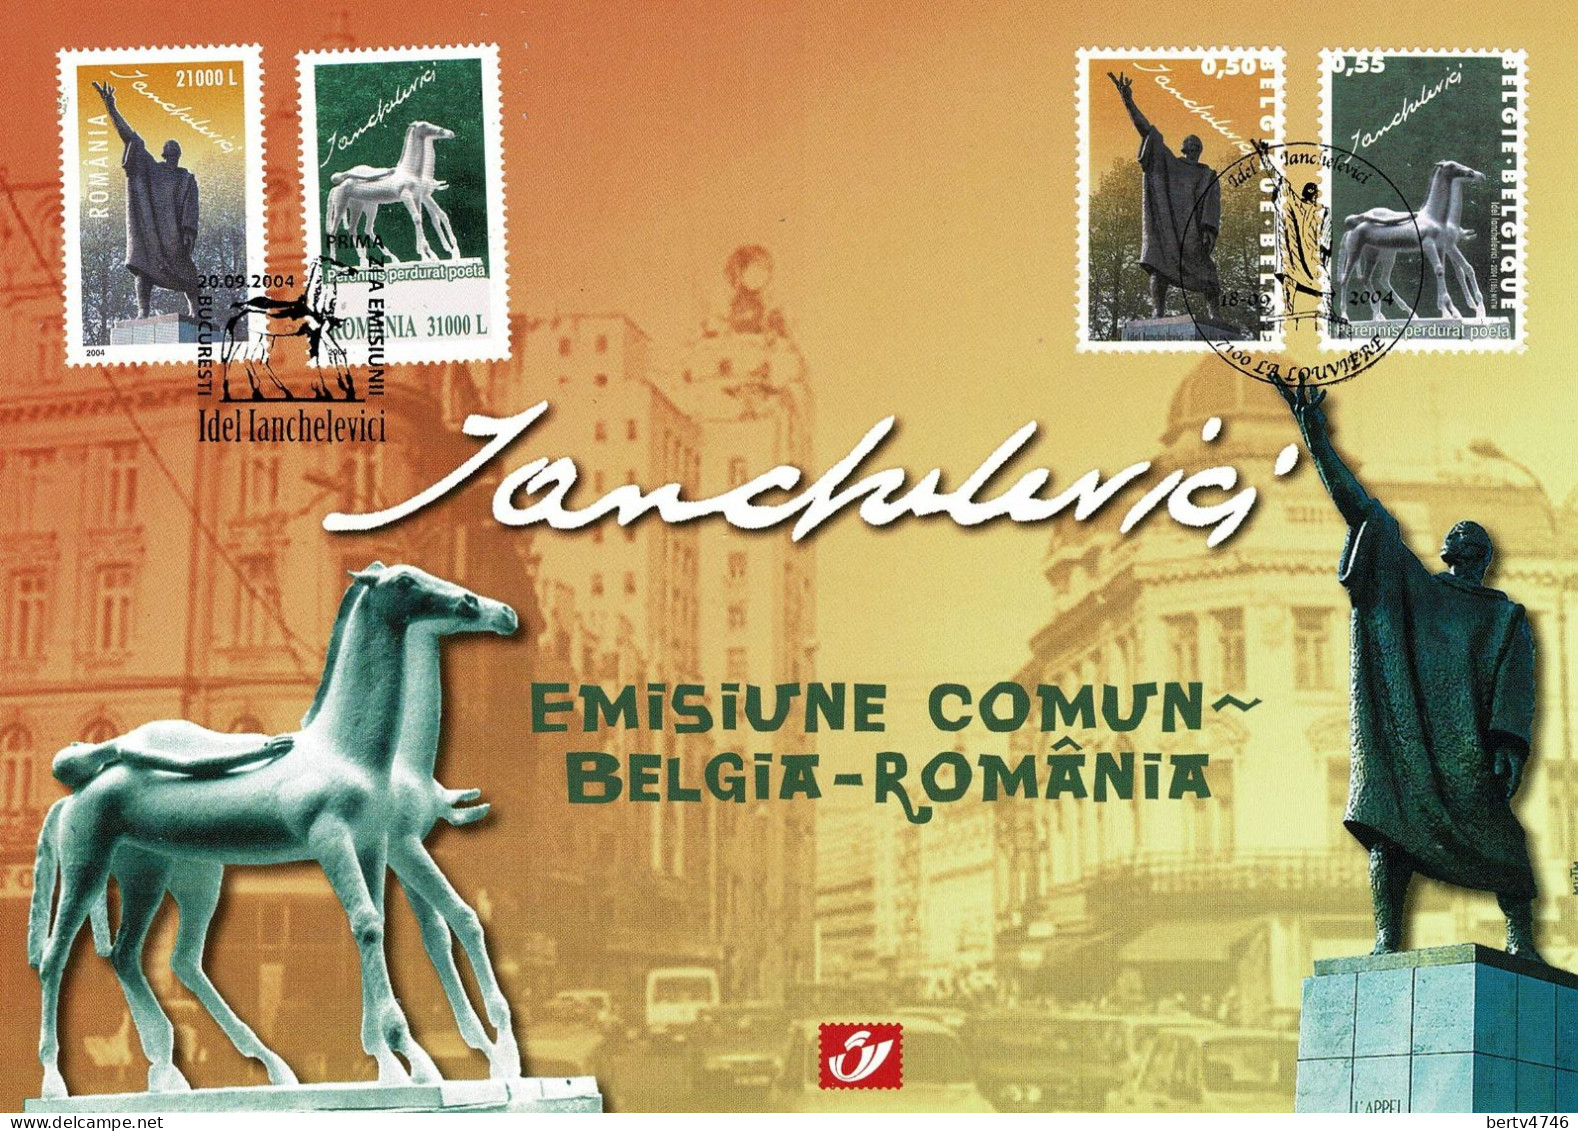 Belg. 2004 - 3308HK België/Roemenië - Belgique/Roumanie - Cartoline Commemorative - Emissioni Congiunte [HK]